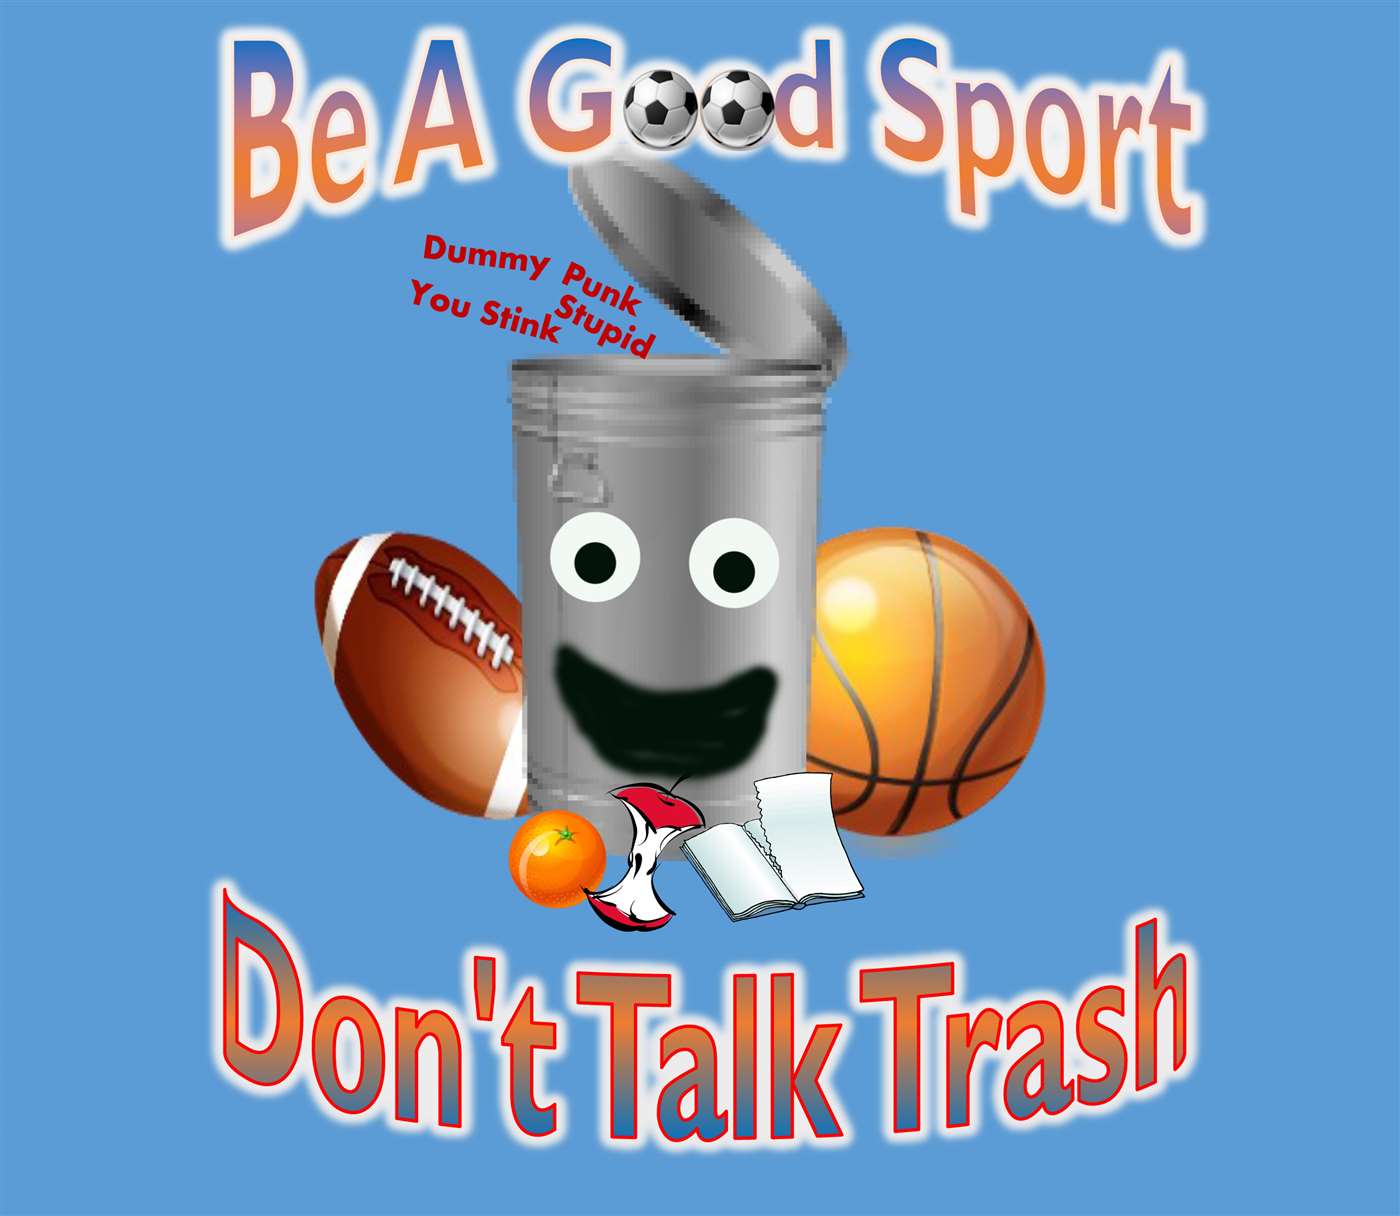 Don't Talk Trash